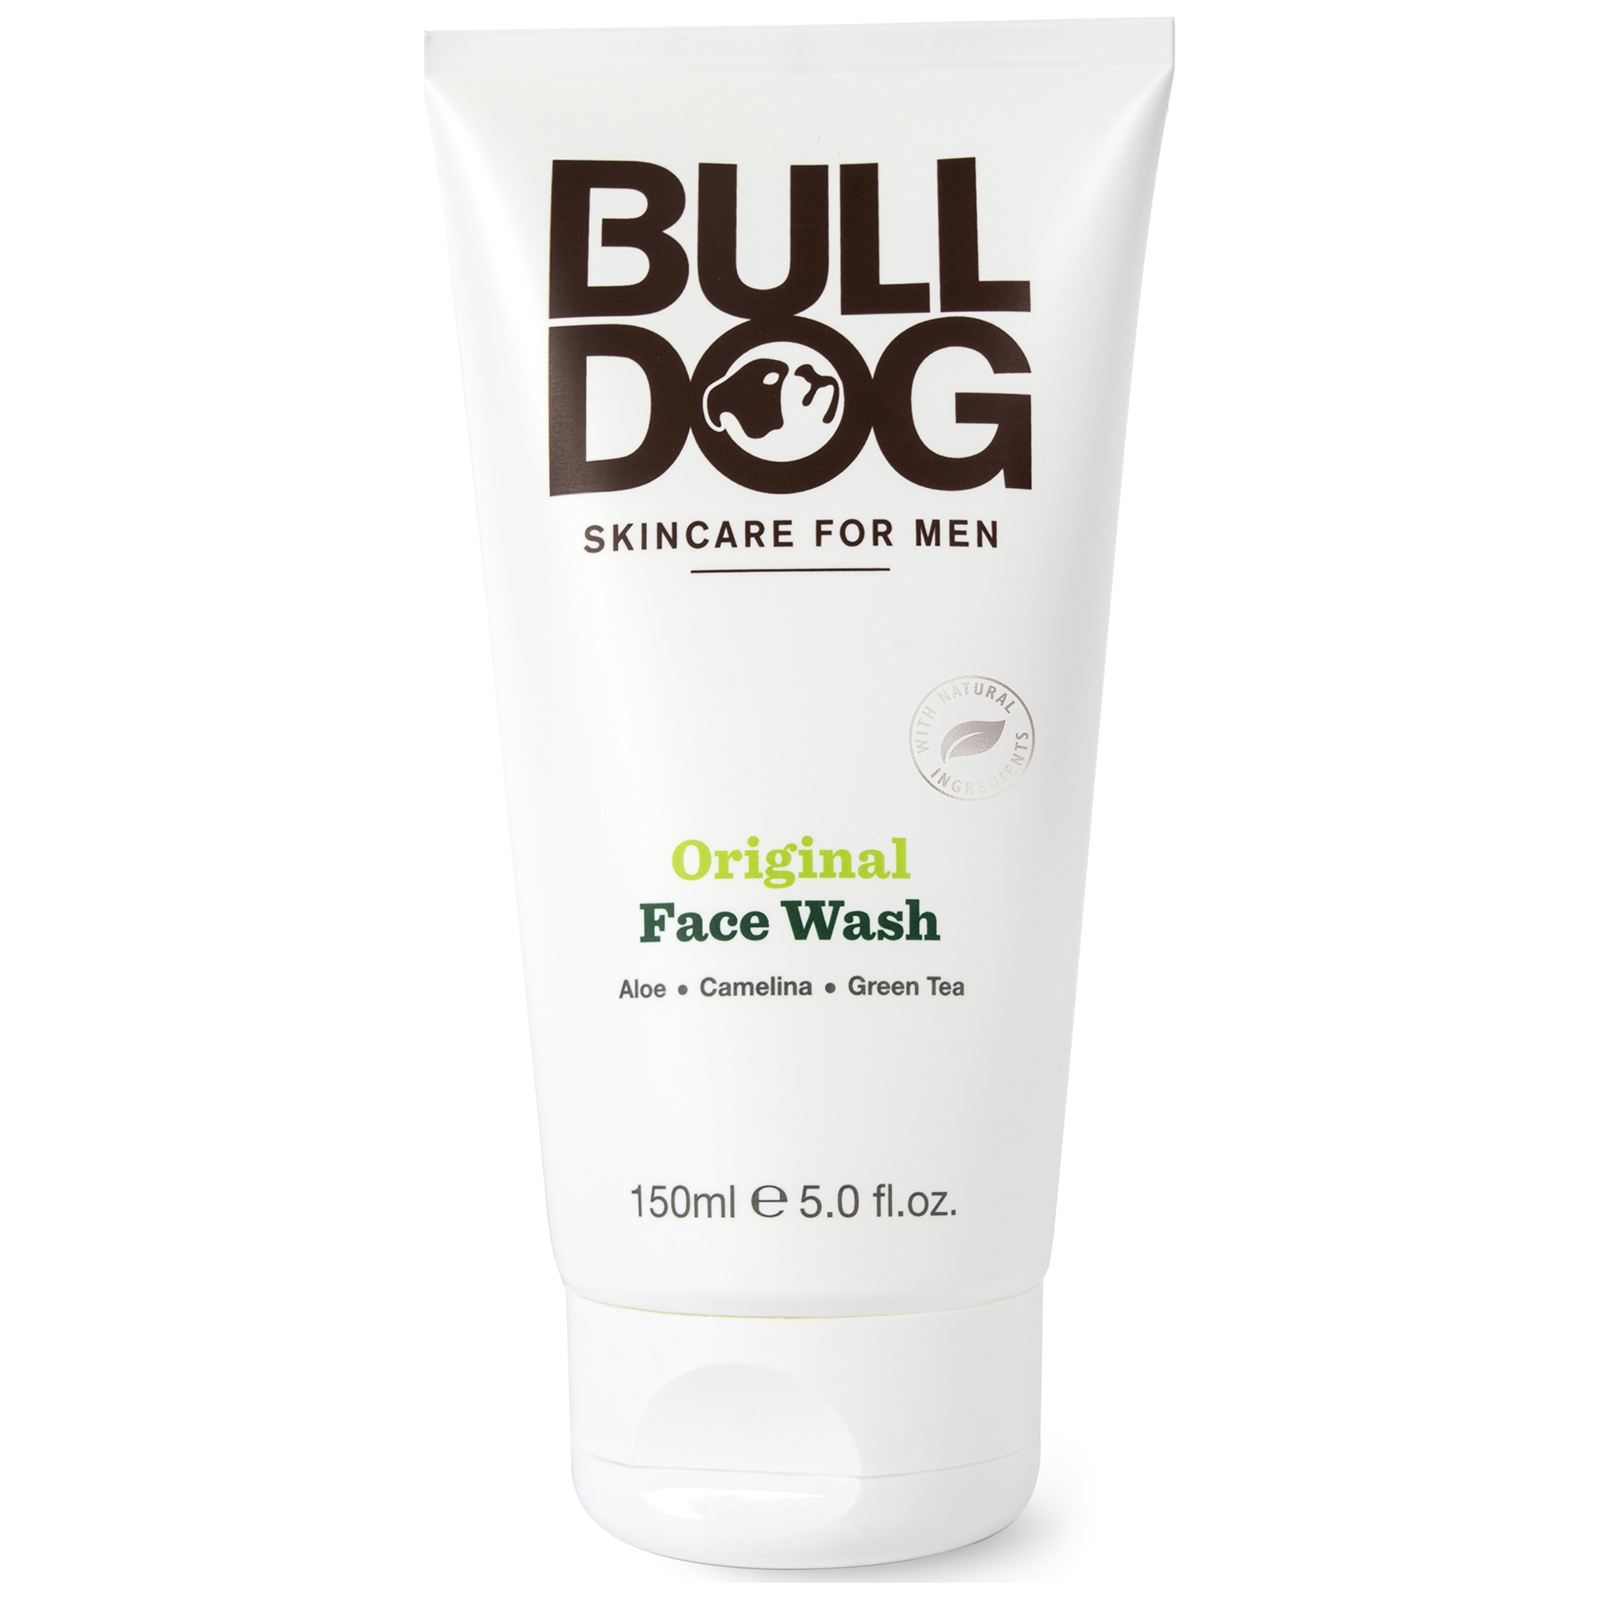 Bulldog Skincare For Men Original Face Wash 150ml